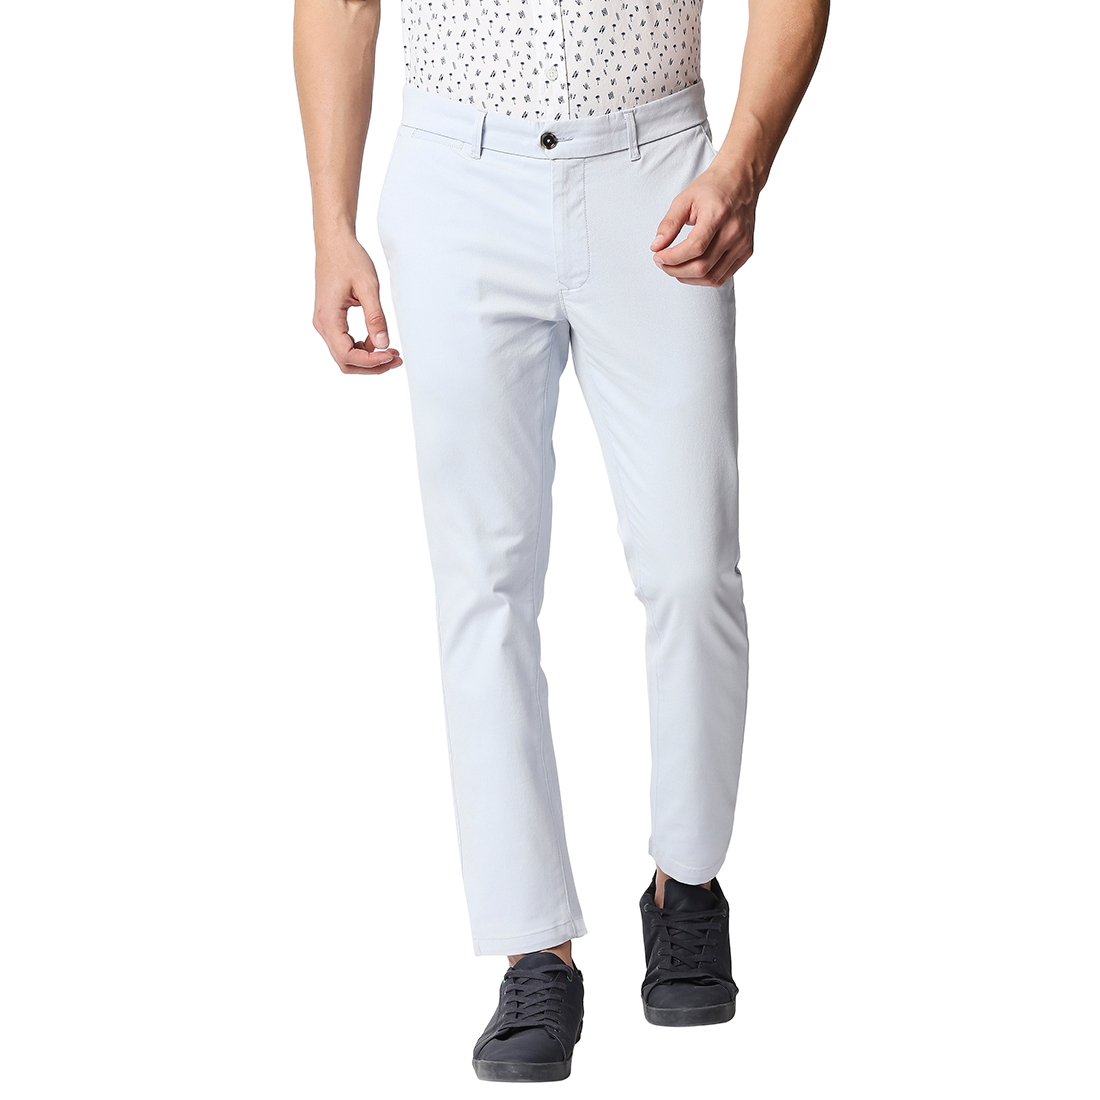 Basics | Men's Light Blue Cotton Blend Solid Trouser 0